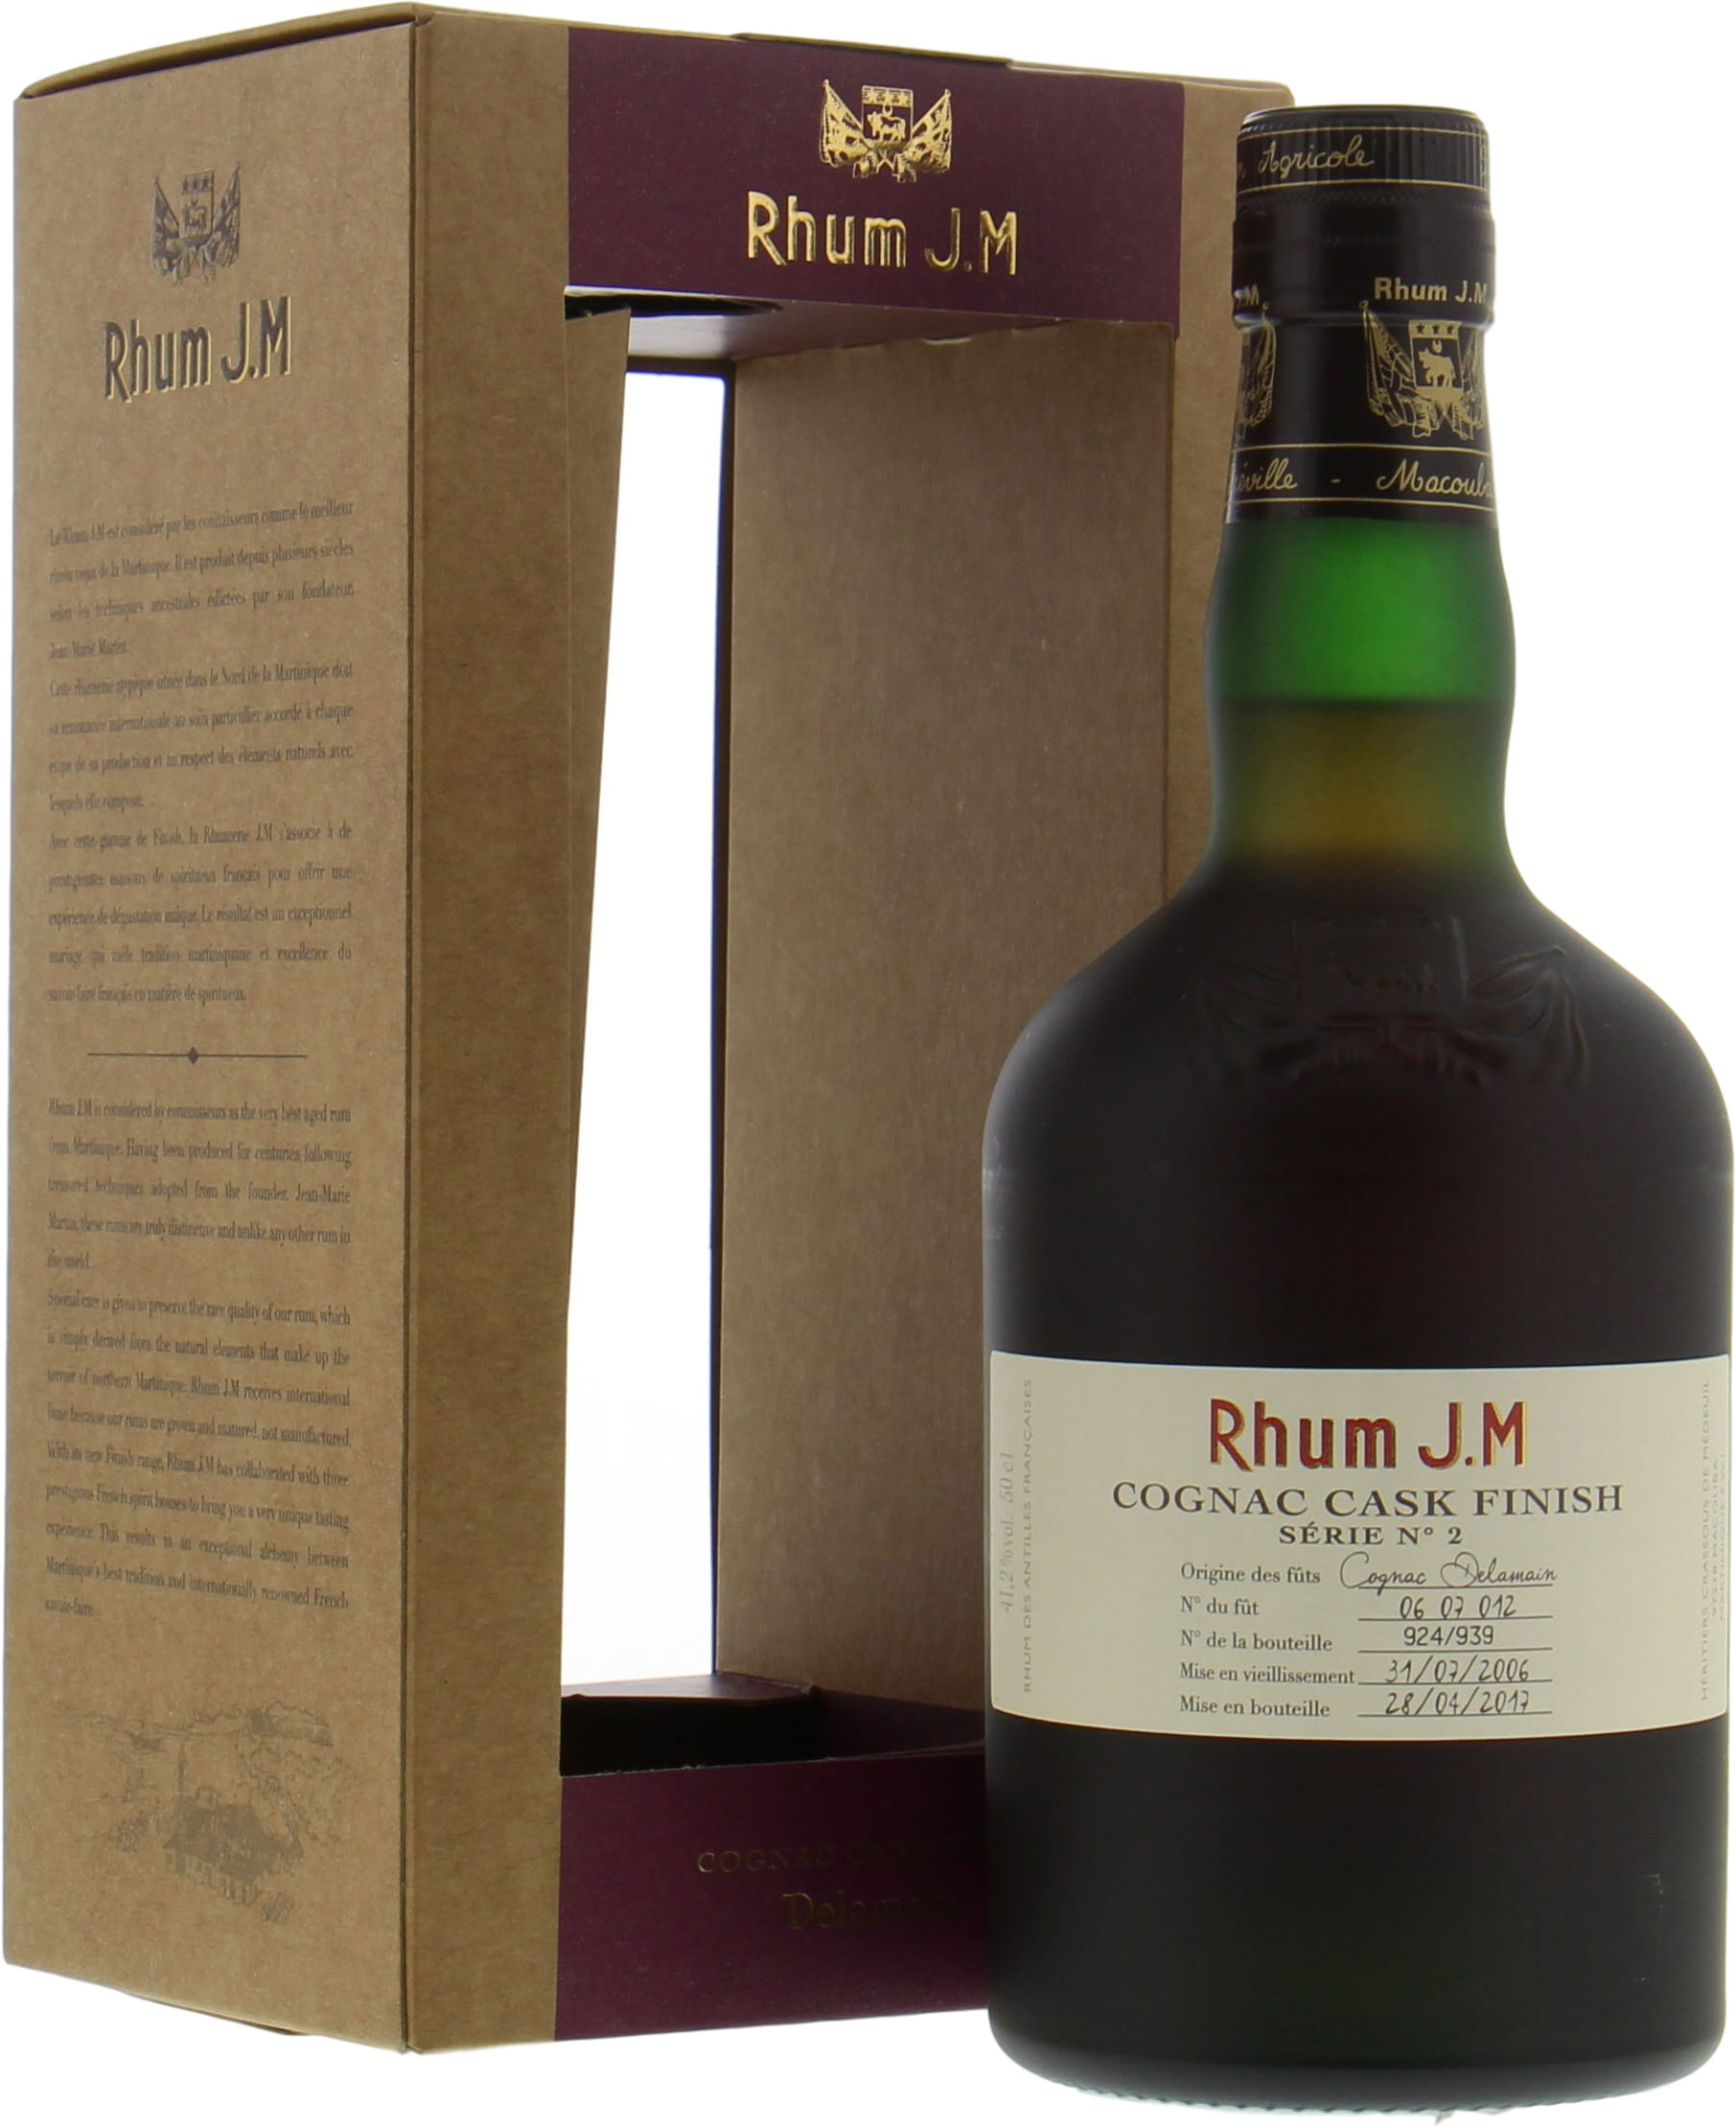 Rhum JM - Cognac Cask Finish Rhum Agricole 41.2% 2006 In Original Carton